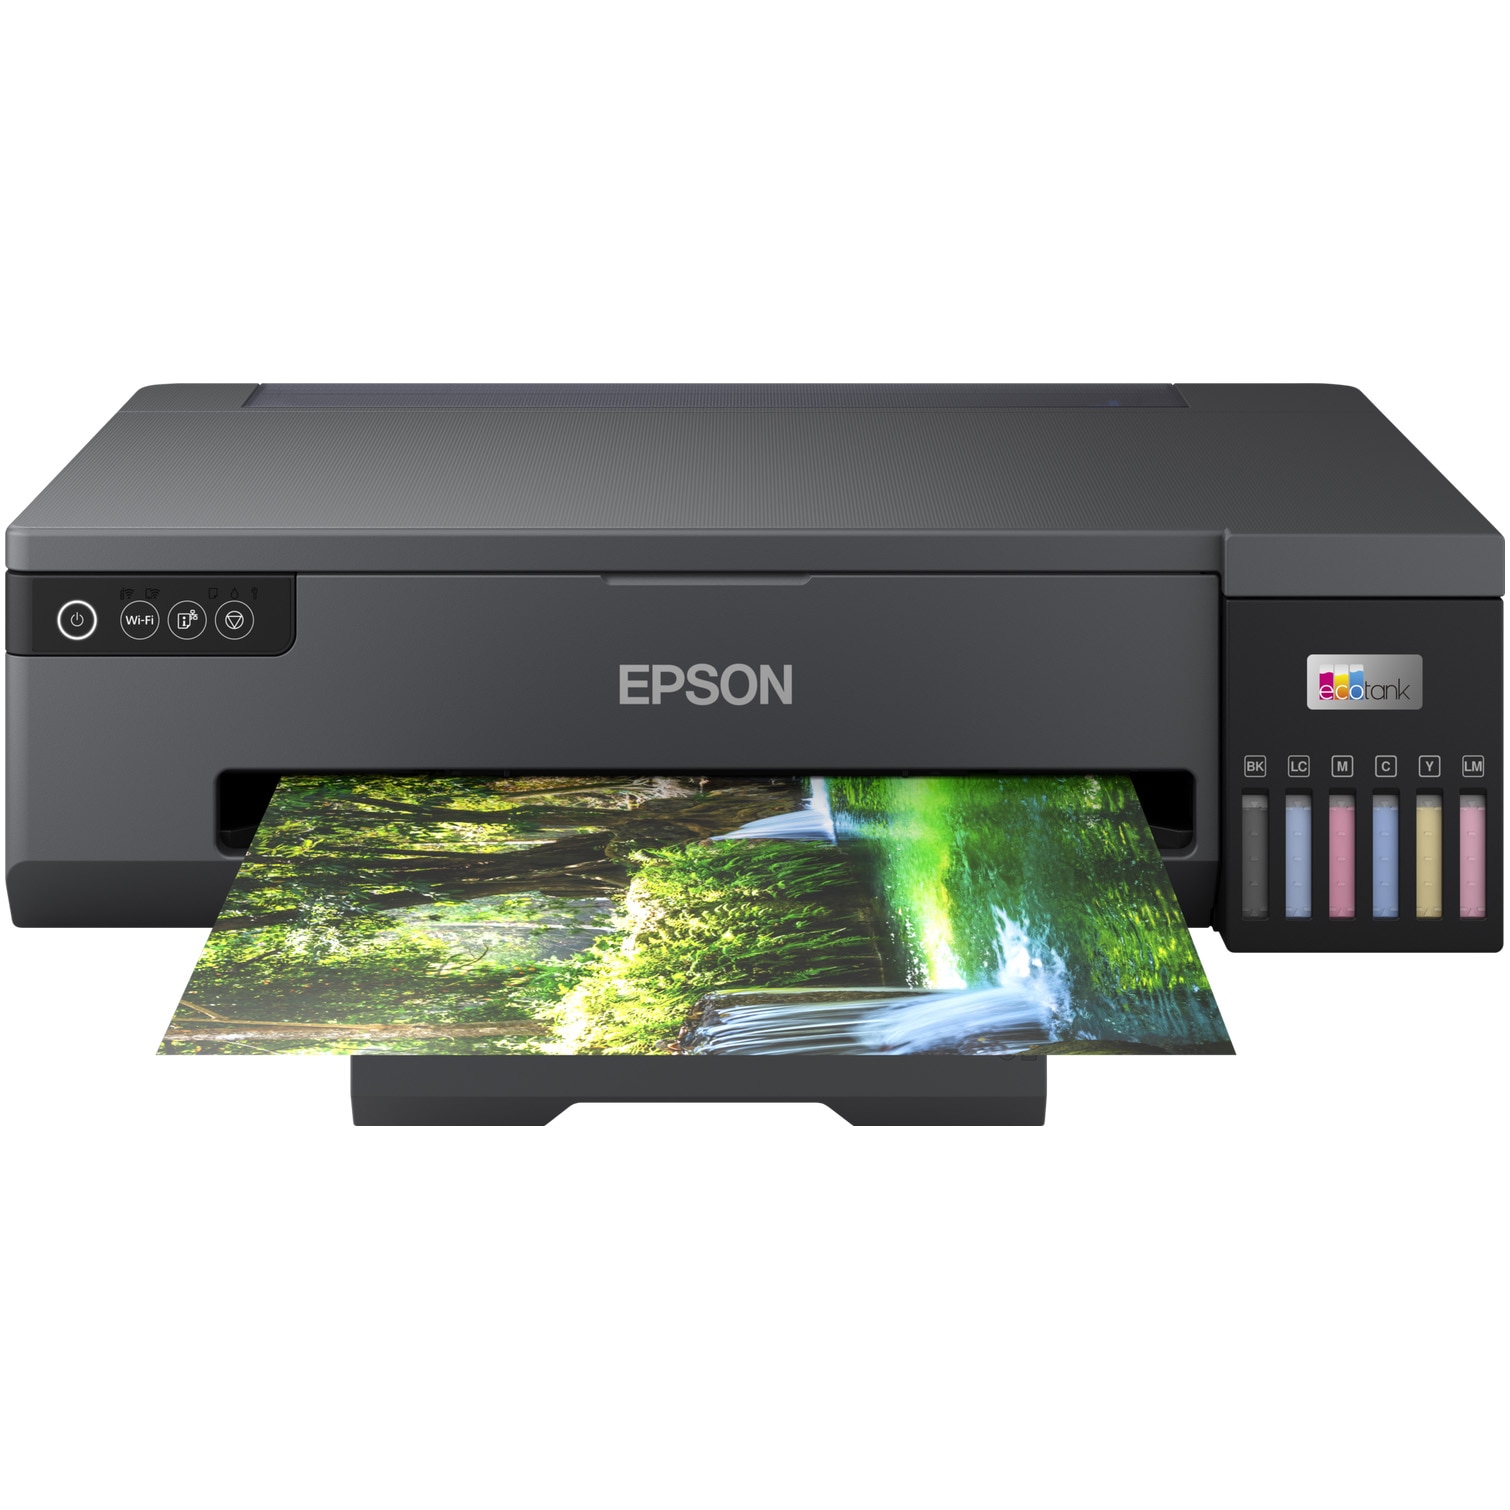 Fotografie Imprimanta inkjet color CISS Epson L18050, dimensiune A3+, viteza printare 22ppm alb-negru, 22ppm color, rezolutie 5760 x 1440 dpi